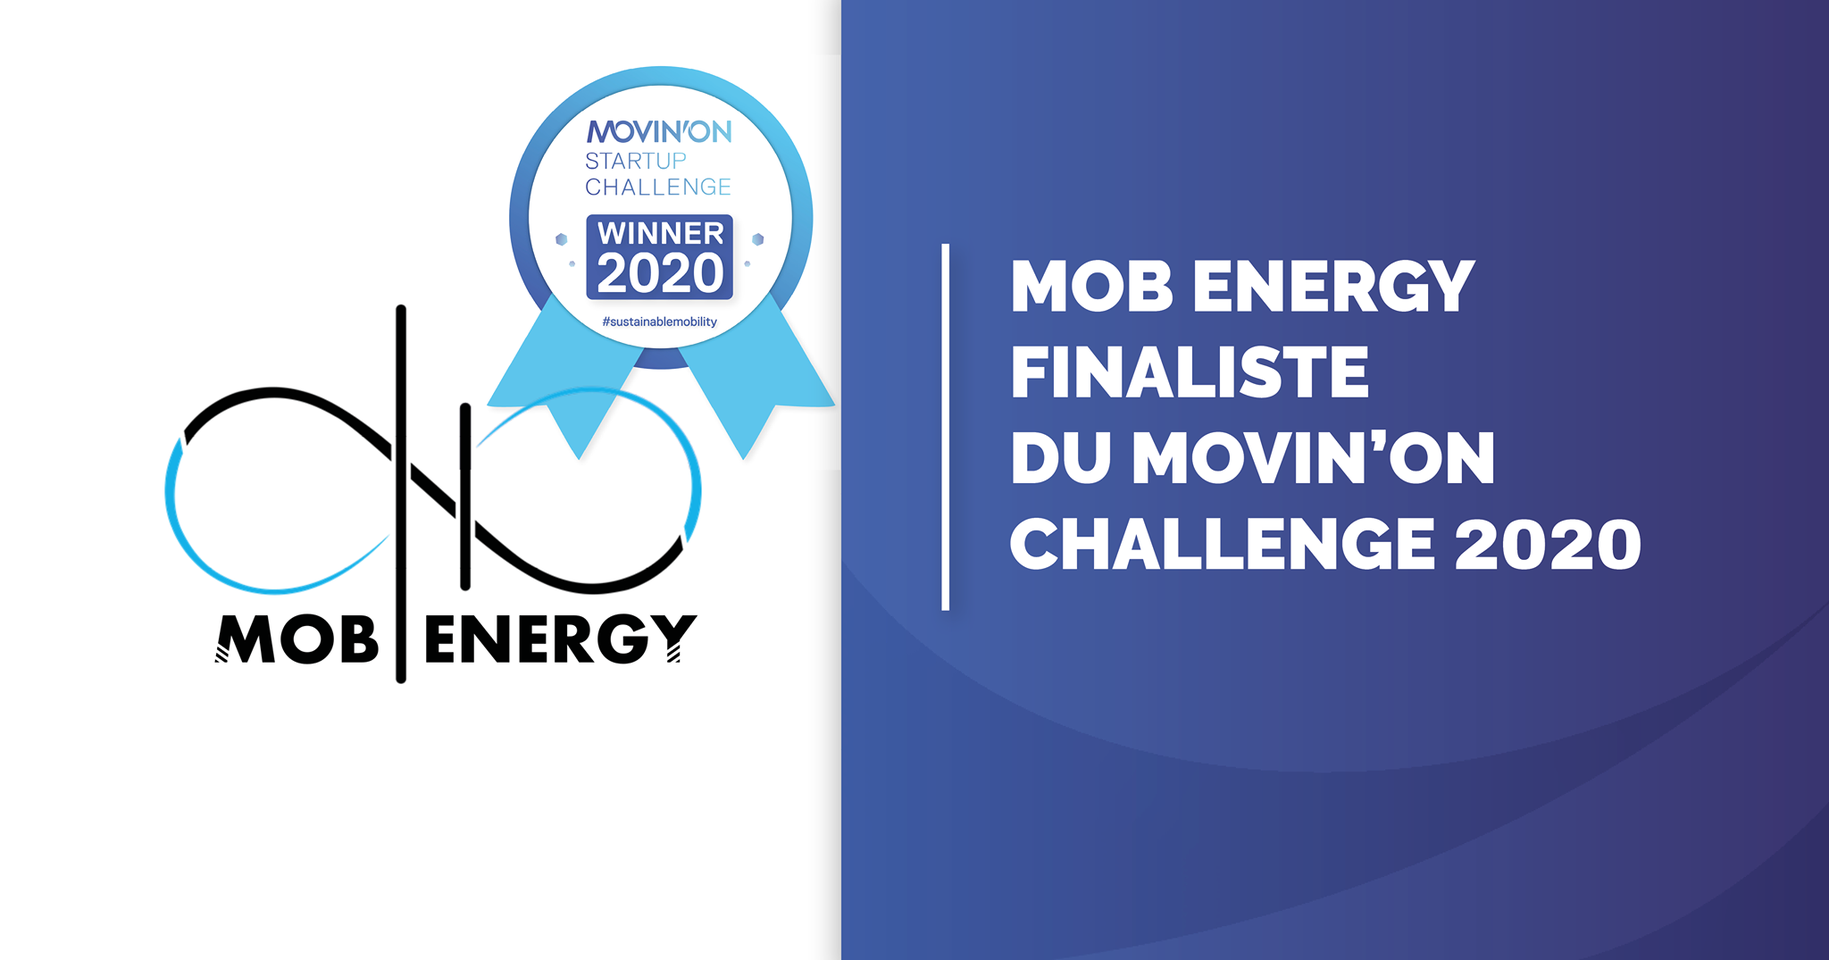 Mob-Energy-finaliste-movin-on-challenge-2020